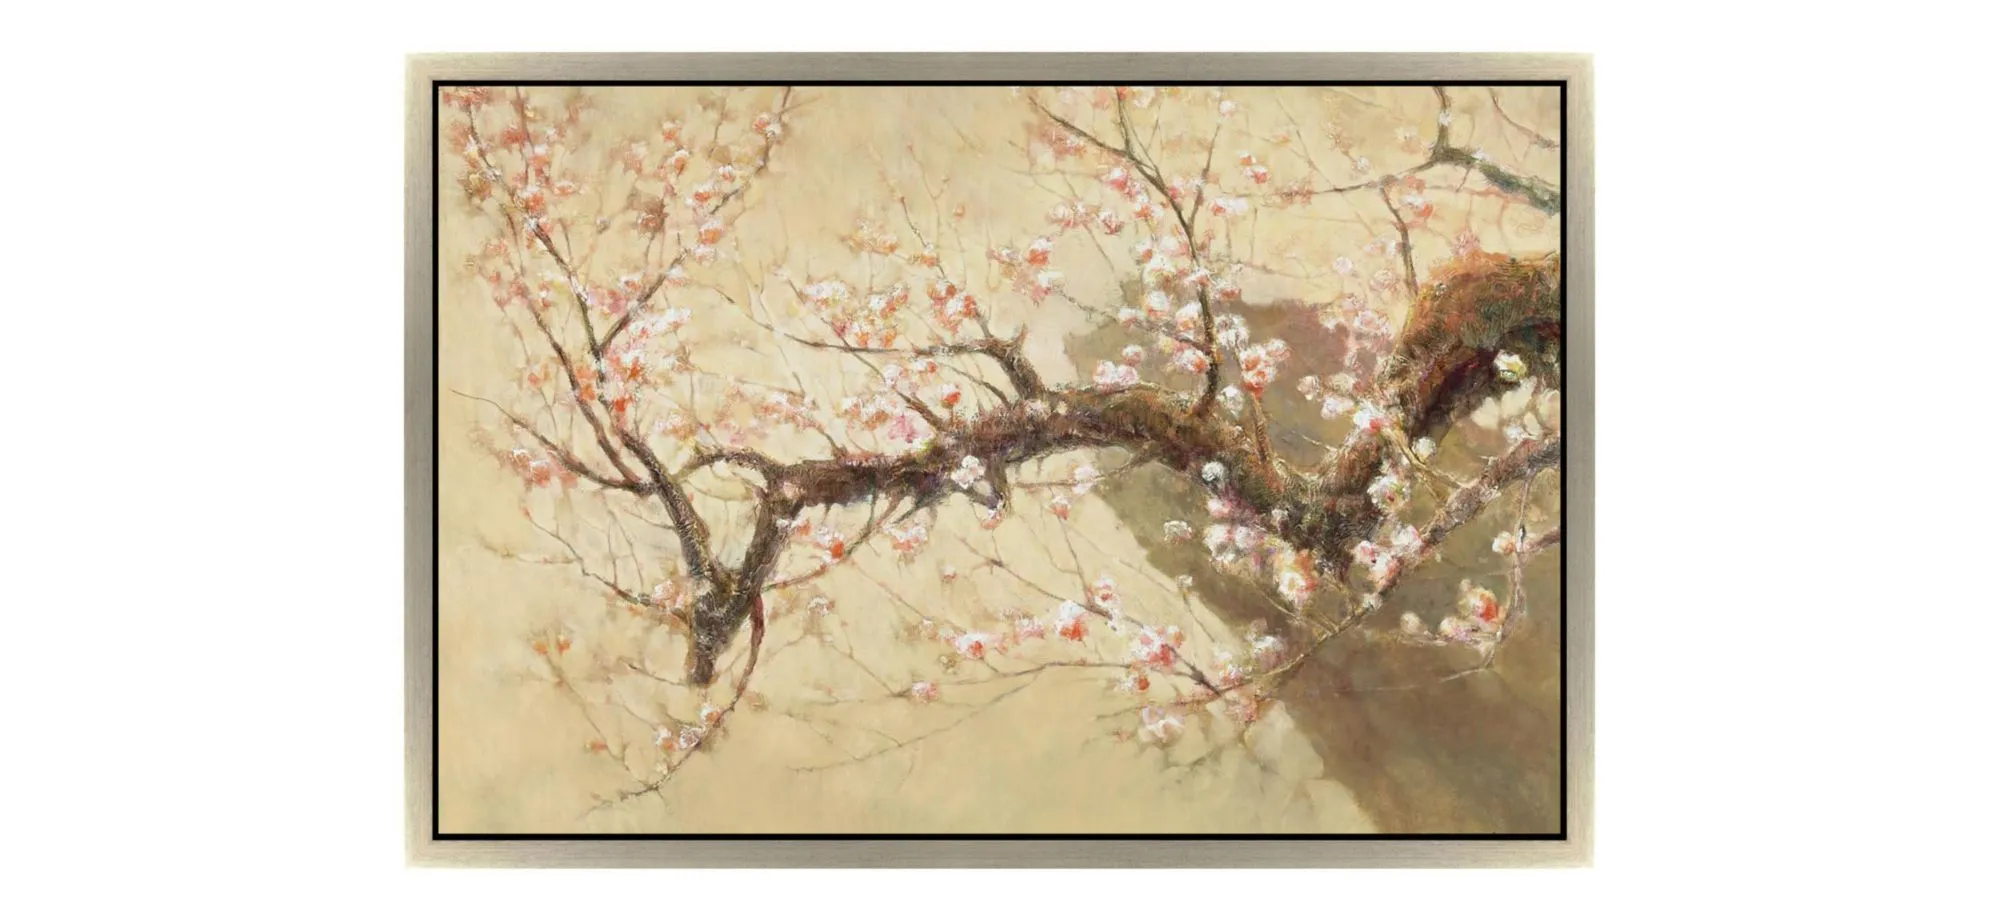 Flowering Branch Framed Canvas Wall Art in Multicolor by Prestige Arts /Ati Indust